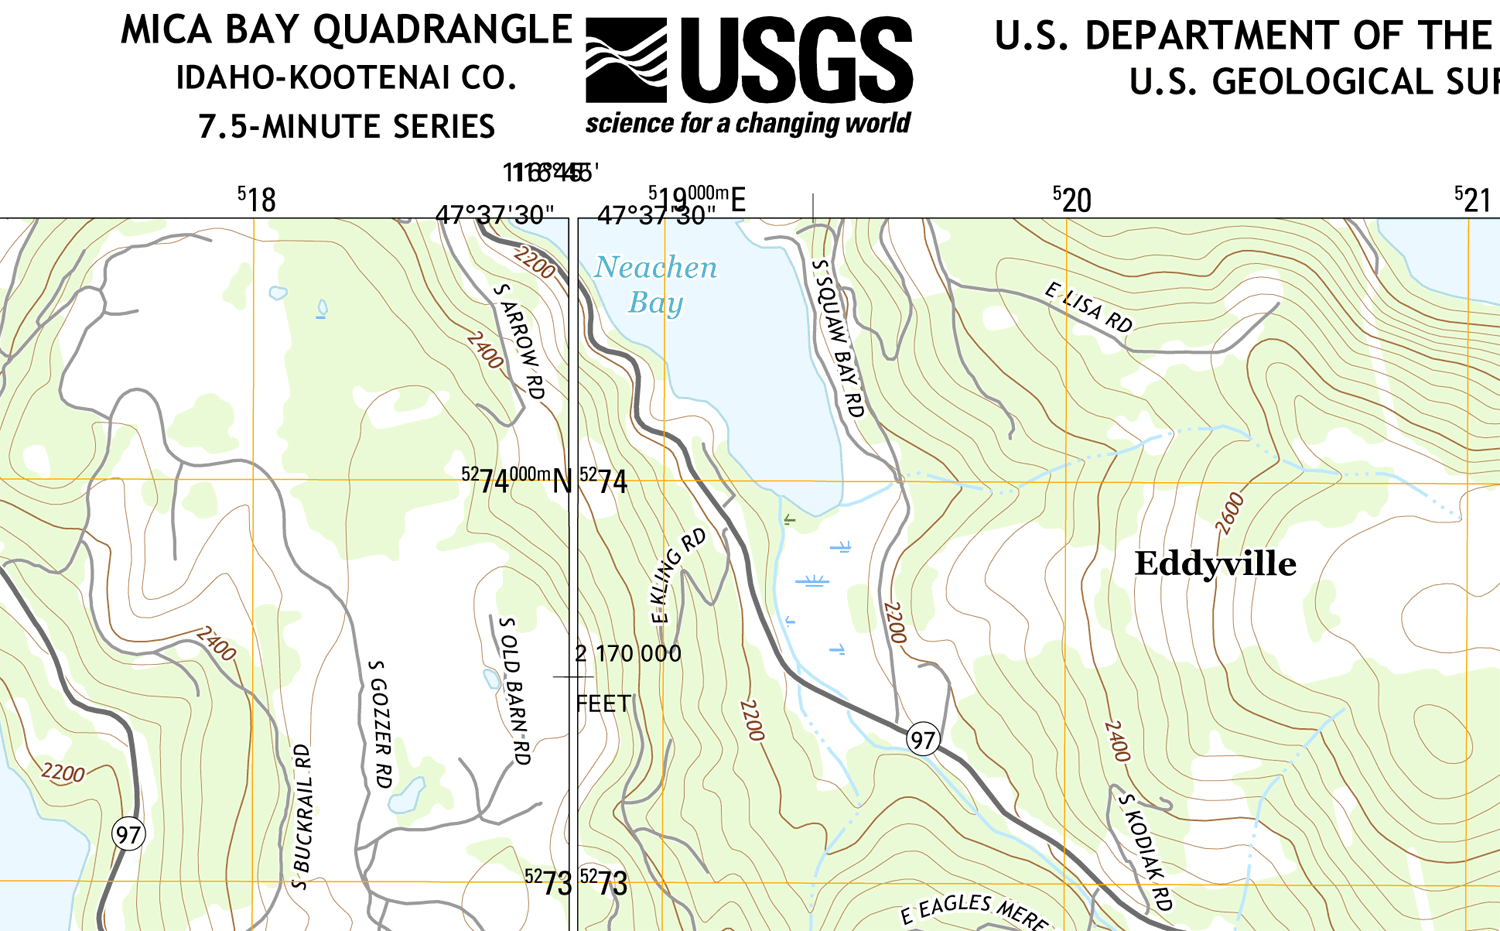 USGS topo map merge phase 3, gap filled animation